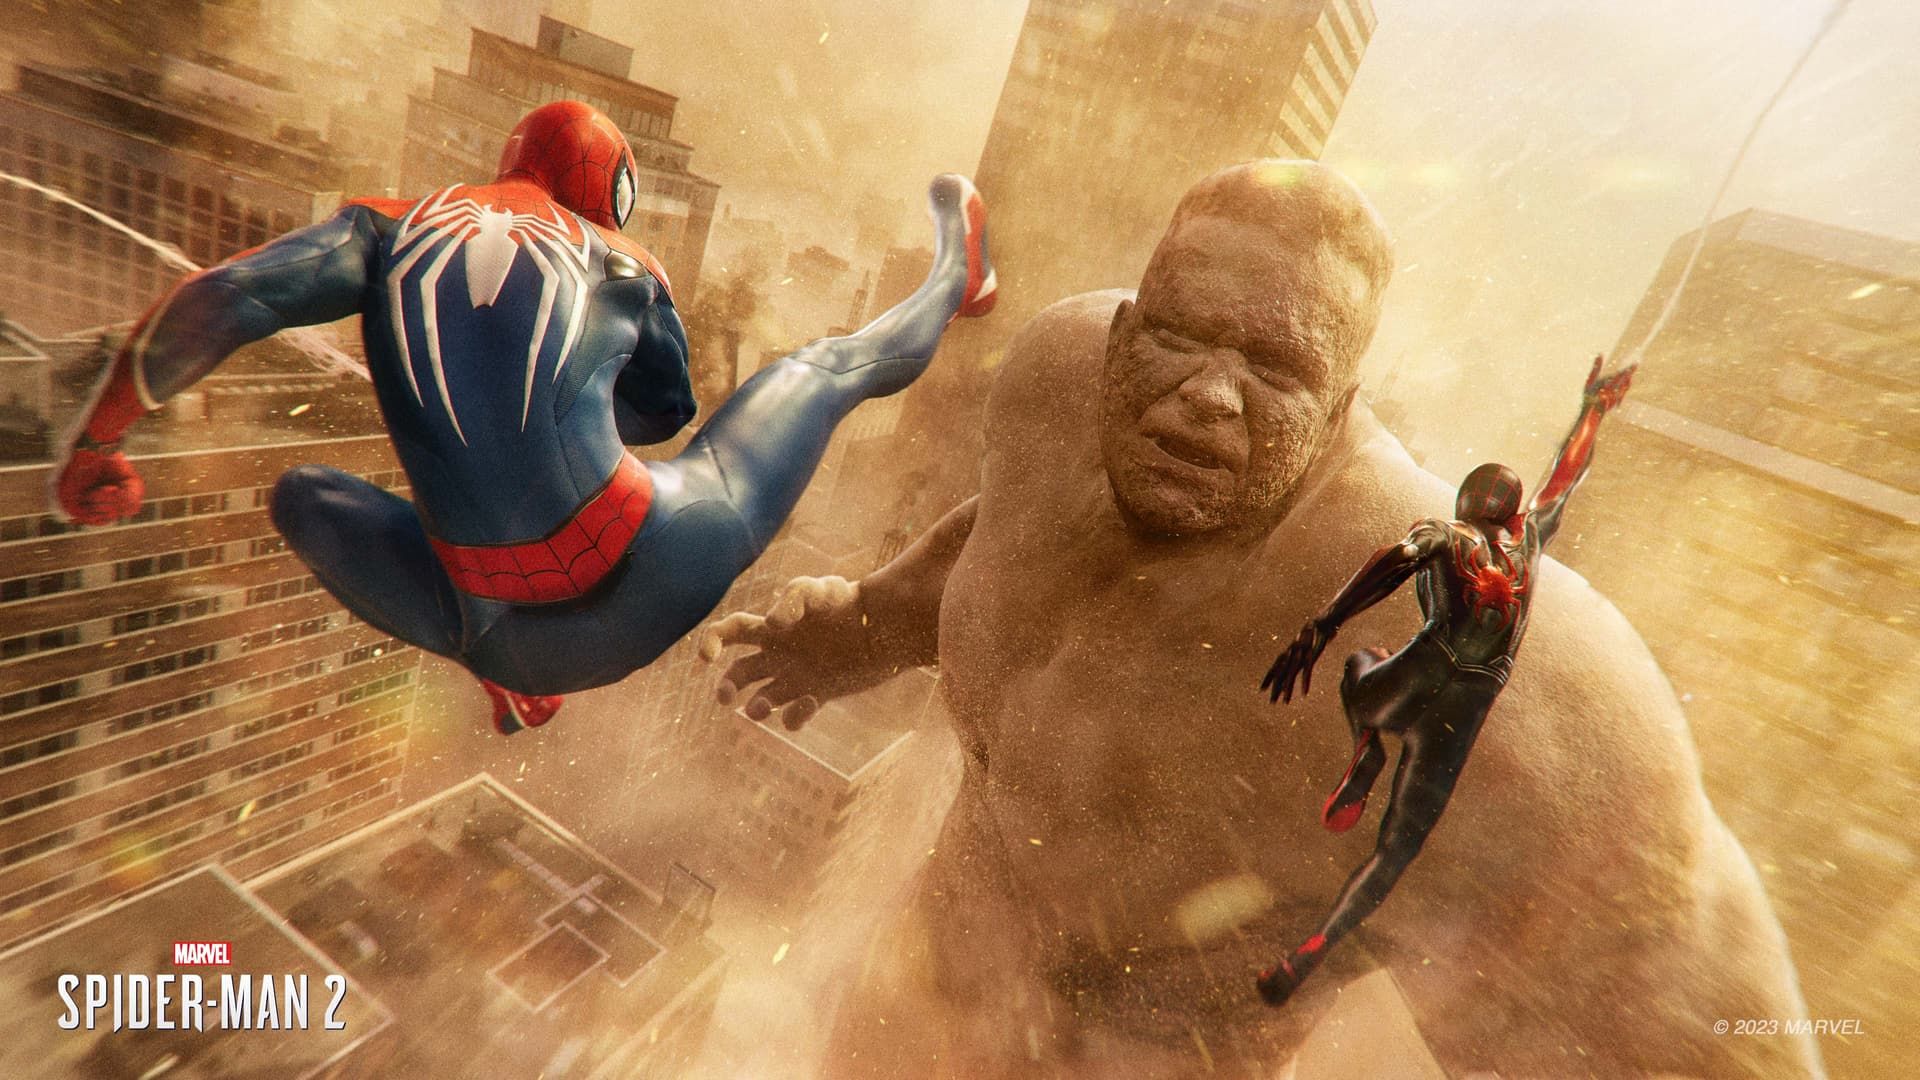 Spider-Man de Peter Parker y Spider-Man de Miles Morales luchan contra Flint Marko the Sandman.